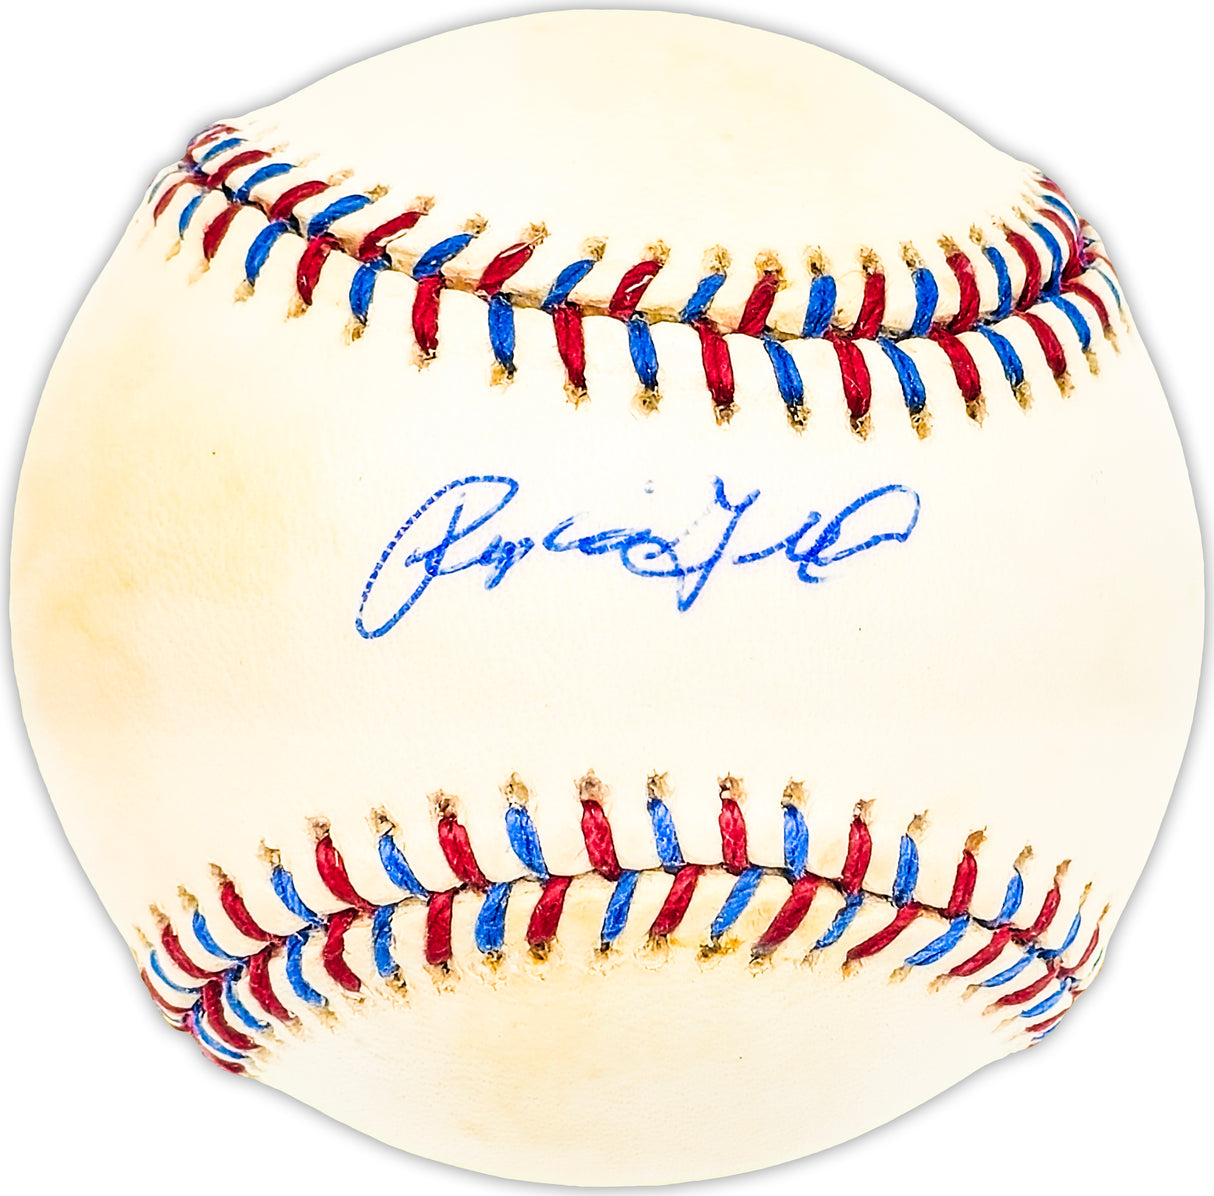 Pumpsie Green Autographed Official 1995 All Star Game Logo Baseball Boston Red Sox Beckett BAS QR #BM25697